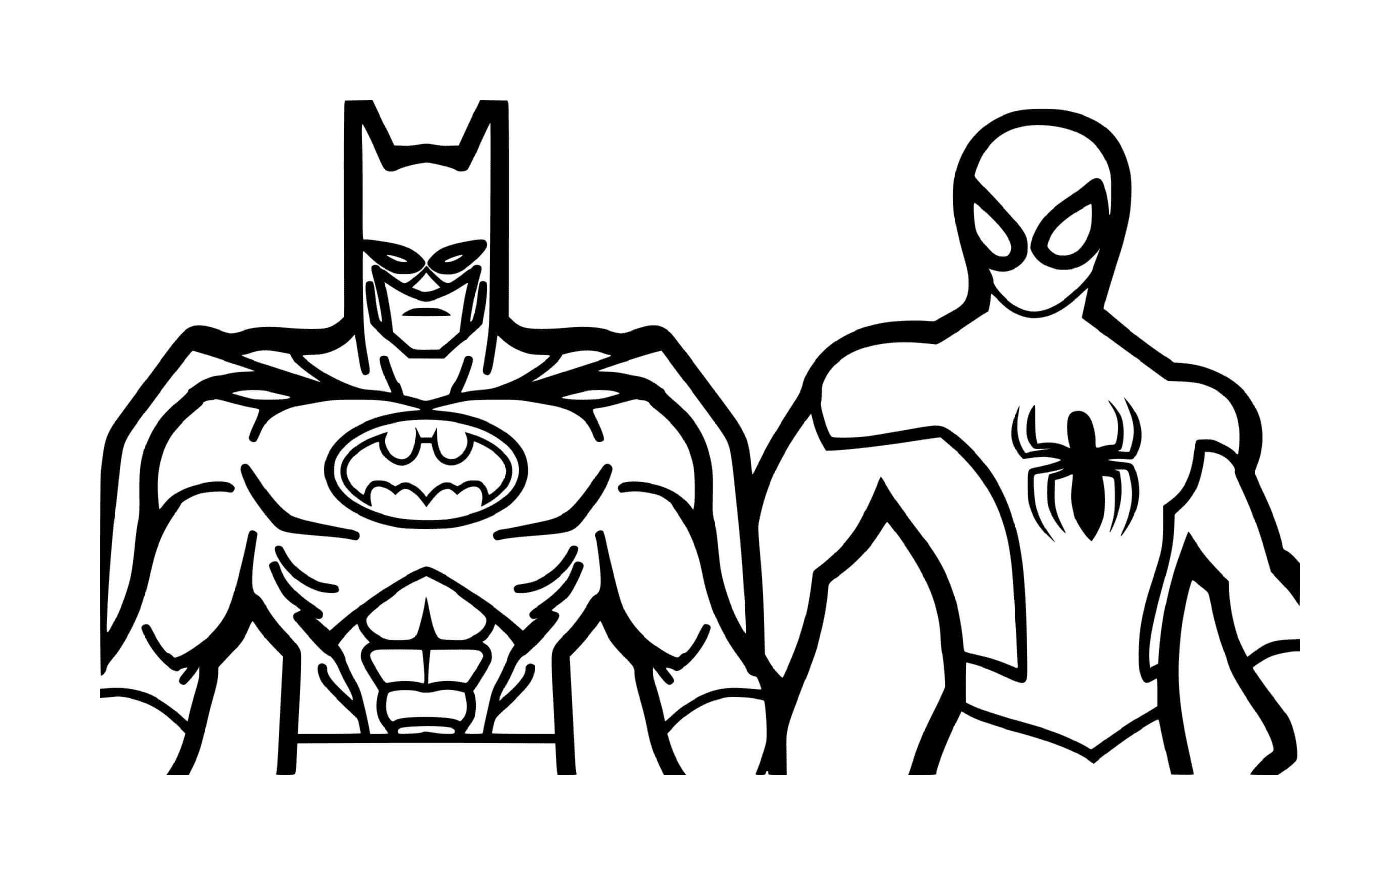  Бэтмен и Паукман, супергерои 